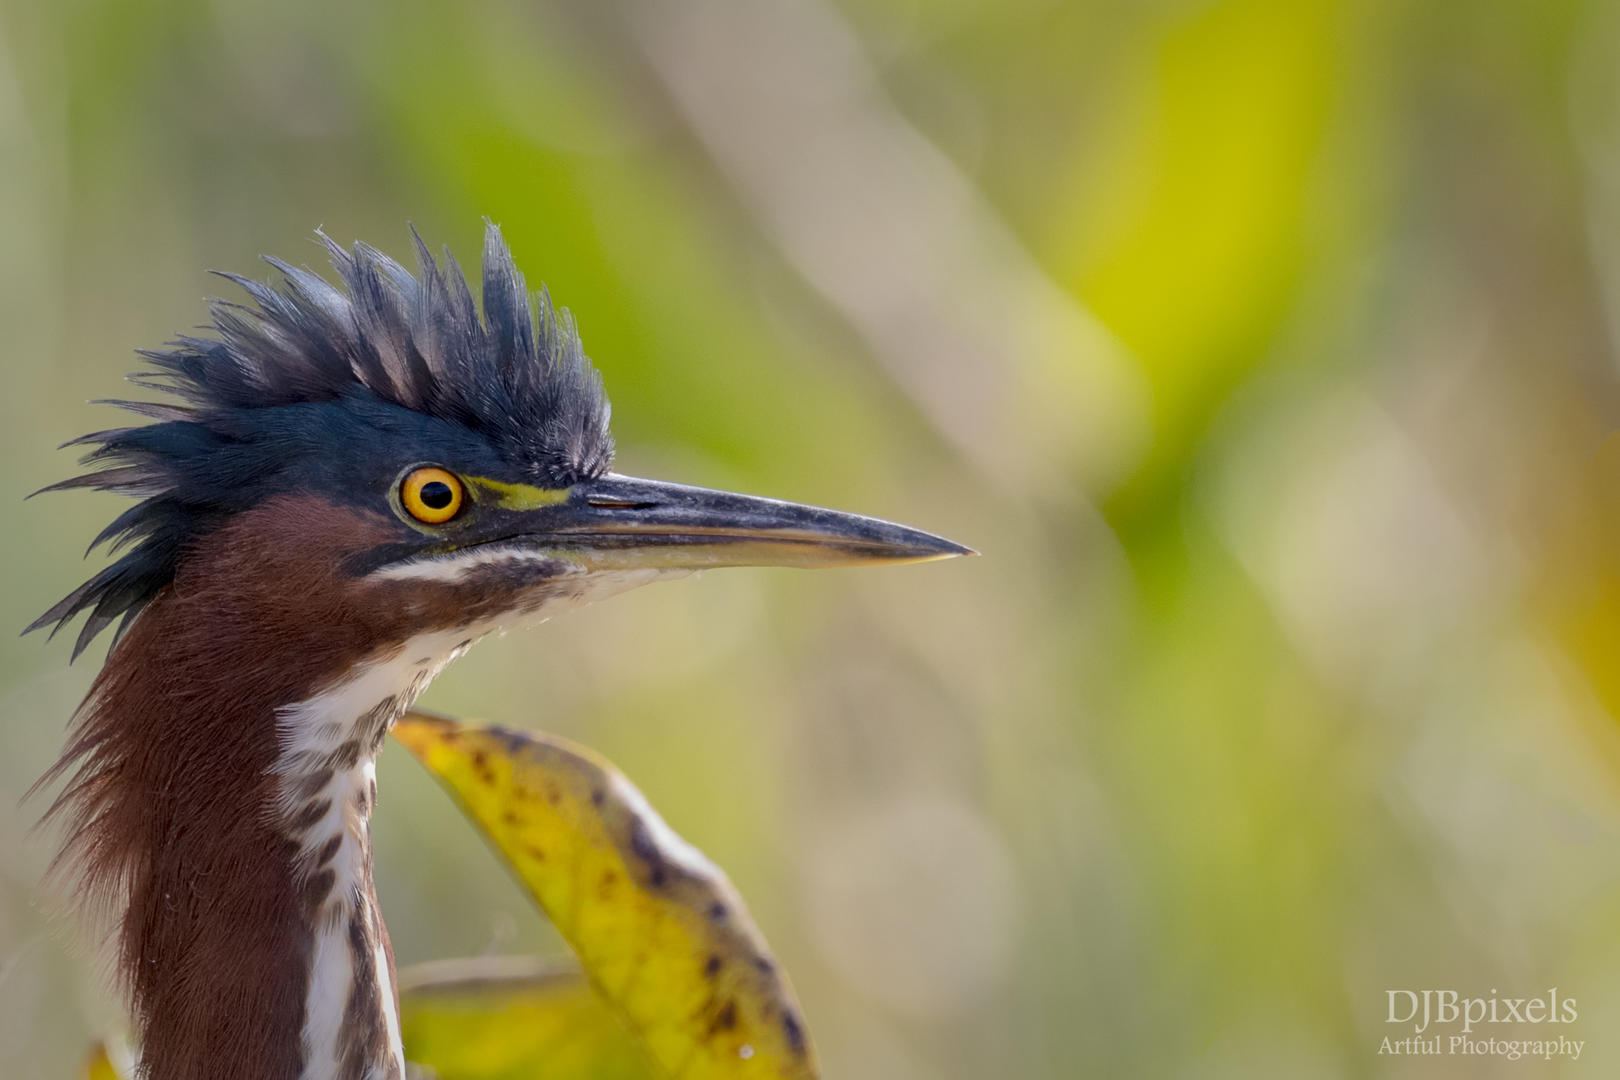 Wetland Birds and Waterbirds - Bird photo contest | Photocrowd photo ...